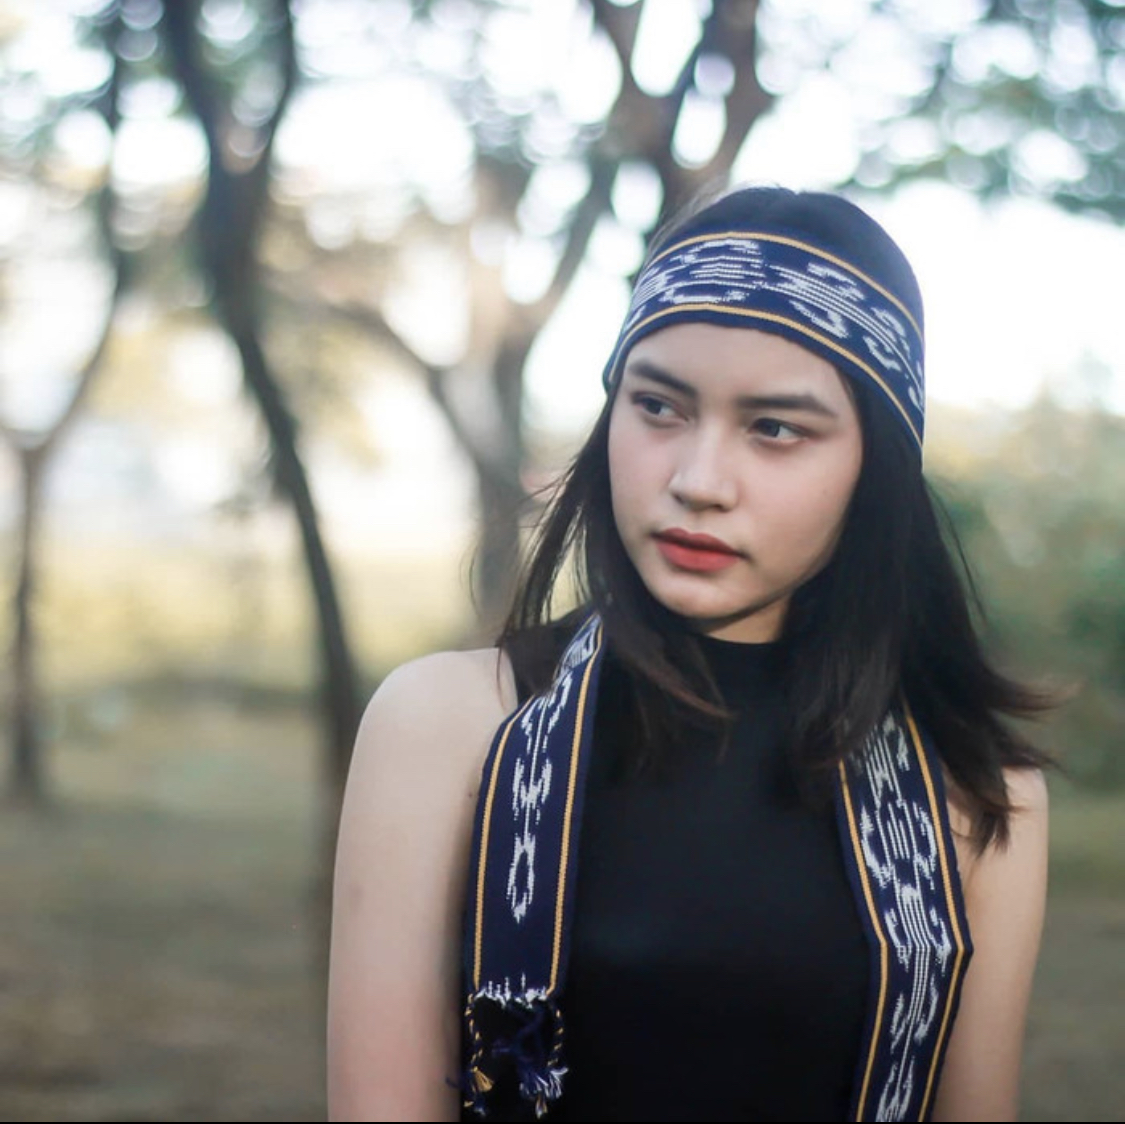 Woven Headband - Original Borneo Dayak Ethnic Motifs - Handmade Weaving - YSA01